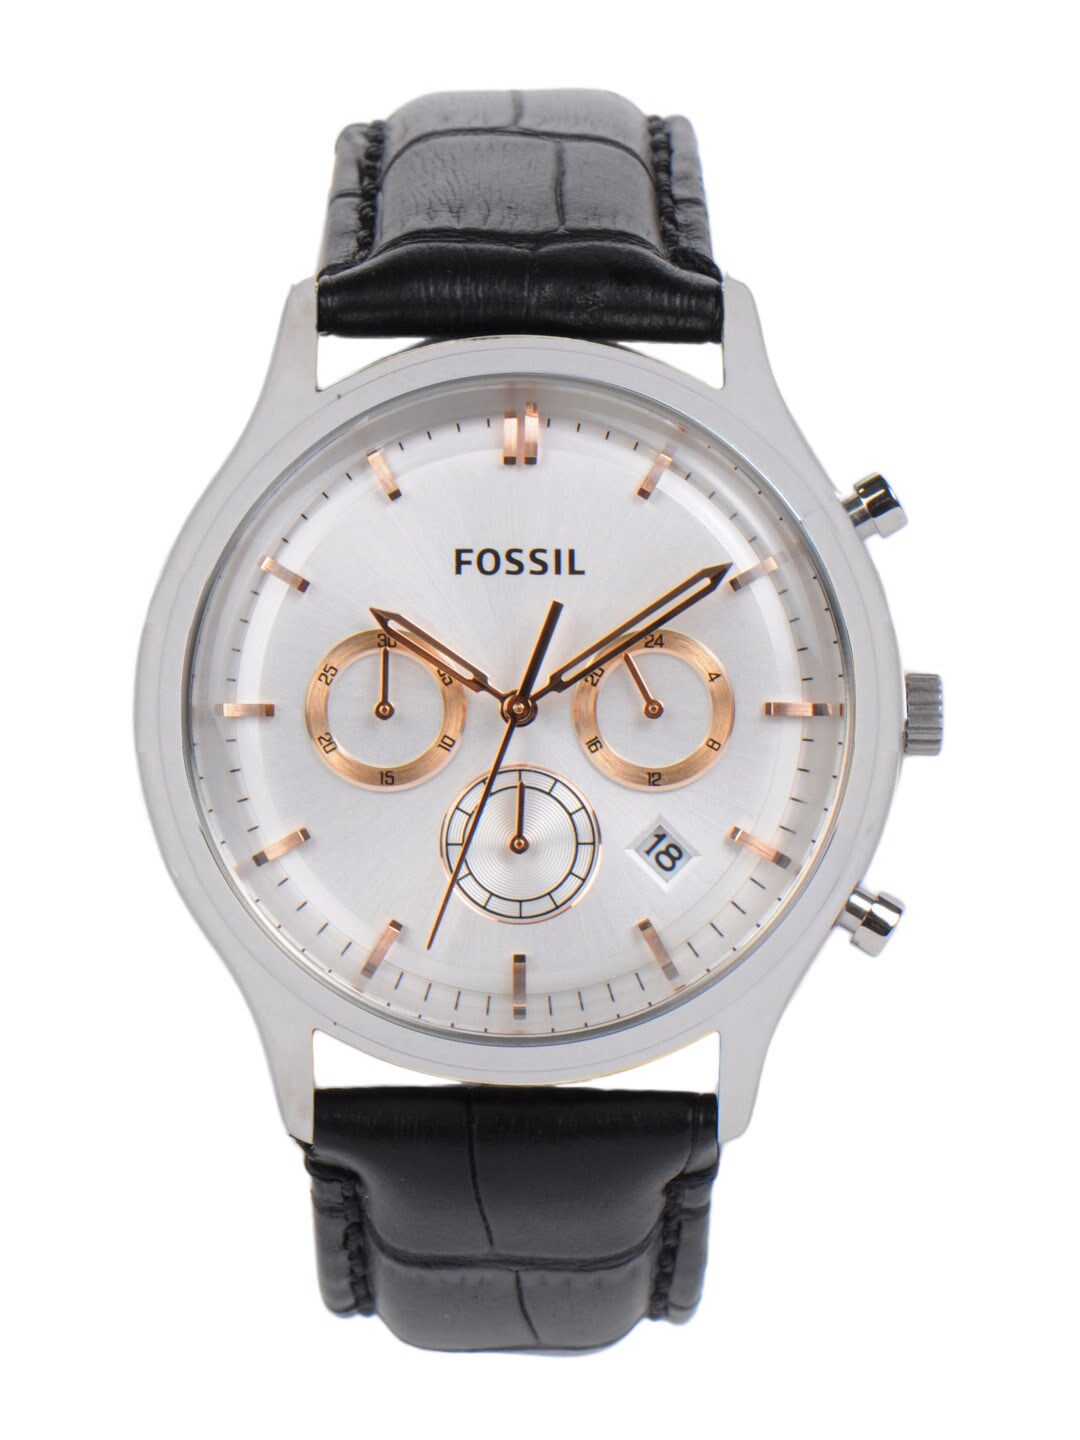 Fossil Men White Dial Chronograph Watch FS4640